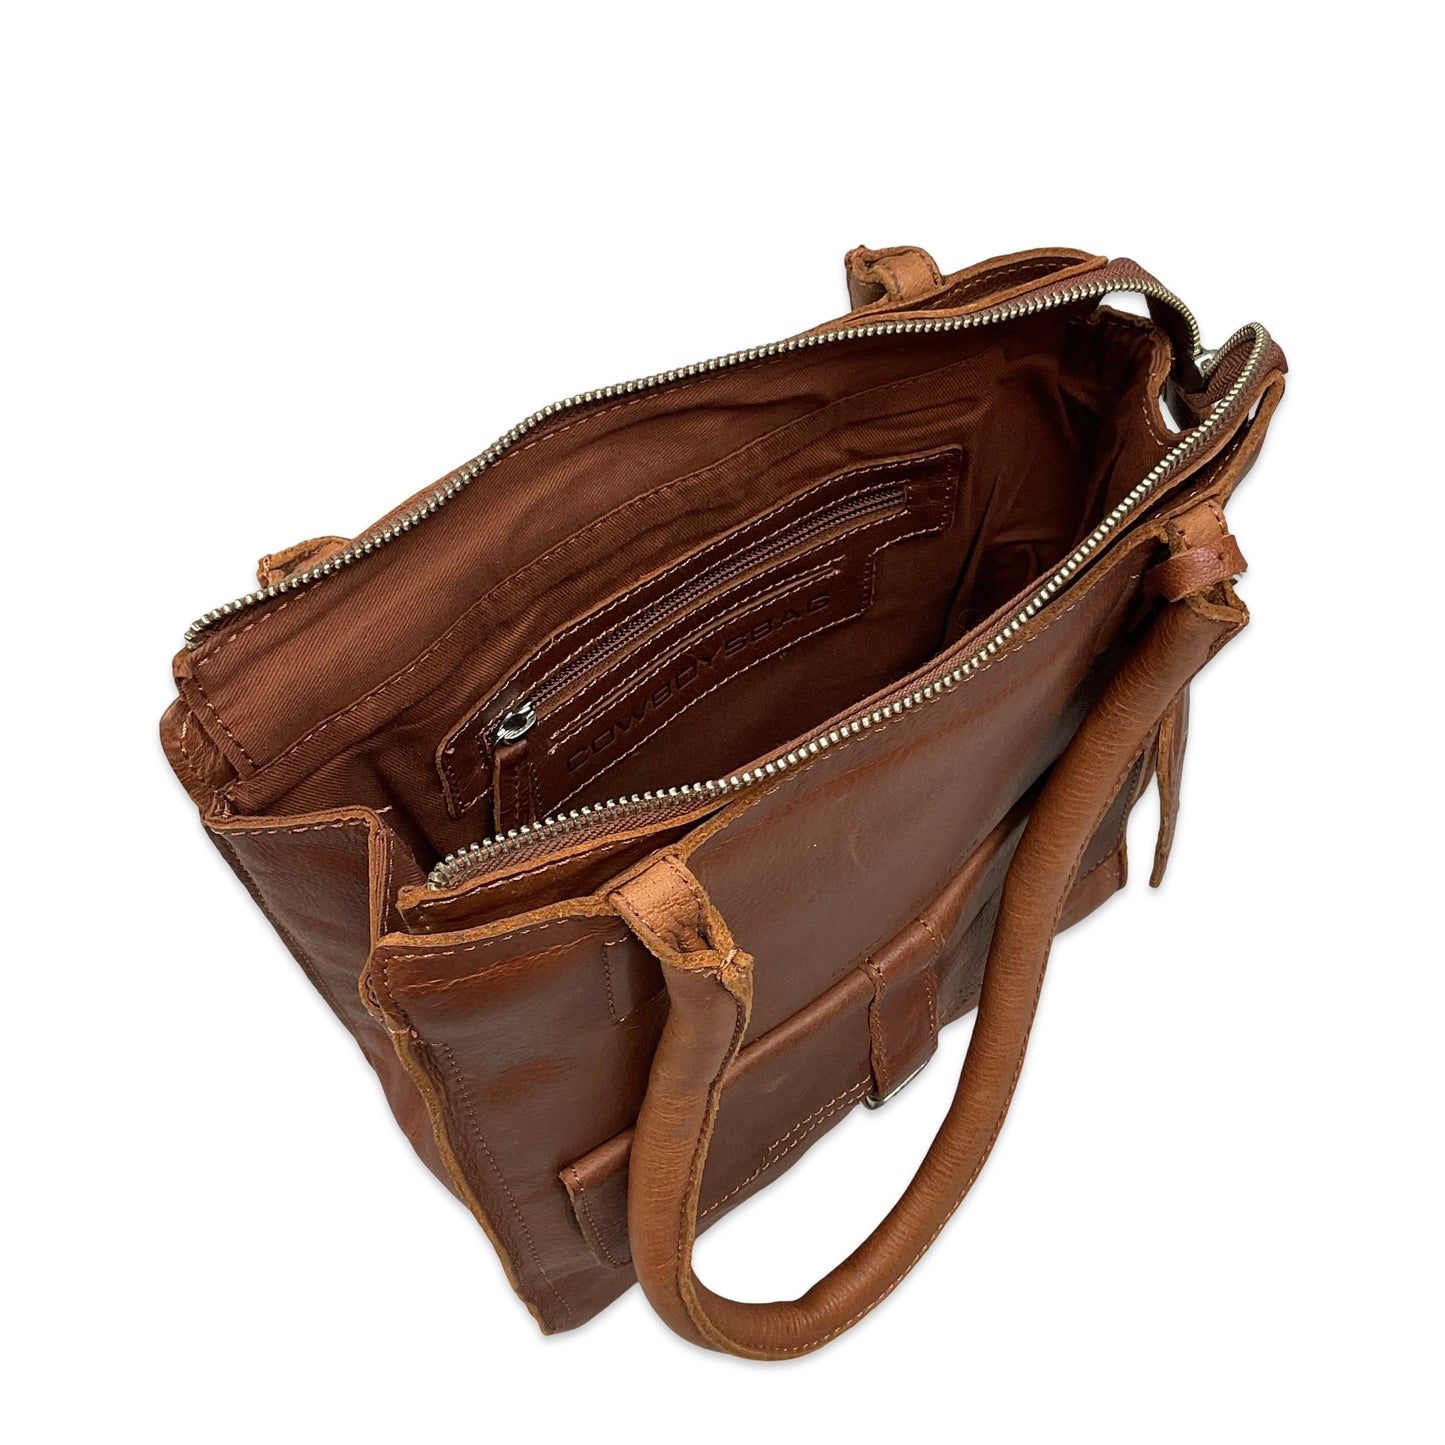 Vintage Brown Leather Handbag